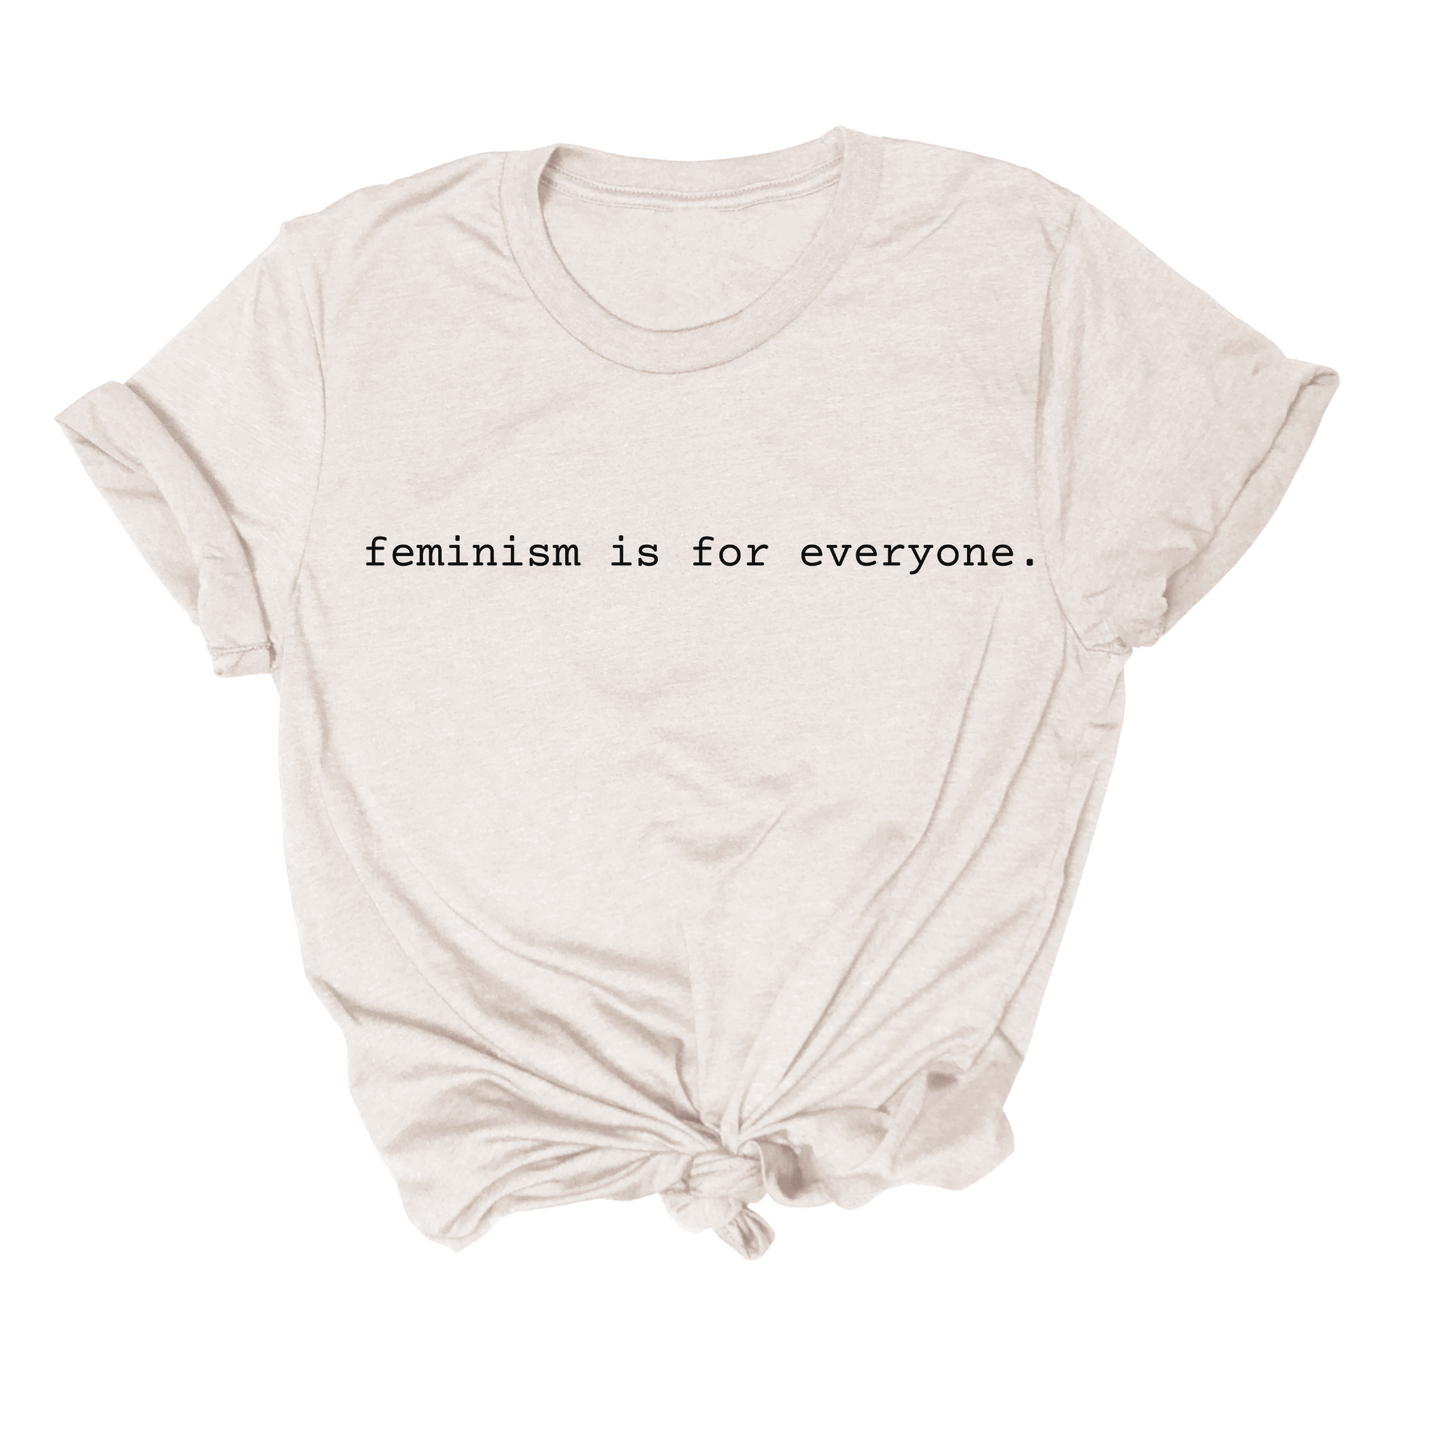 feminism is for everyone tshirt